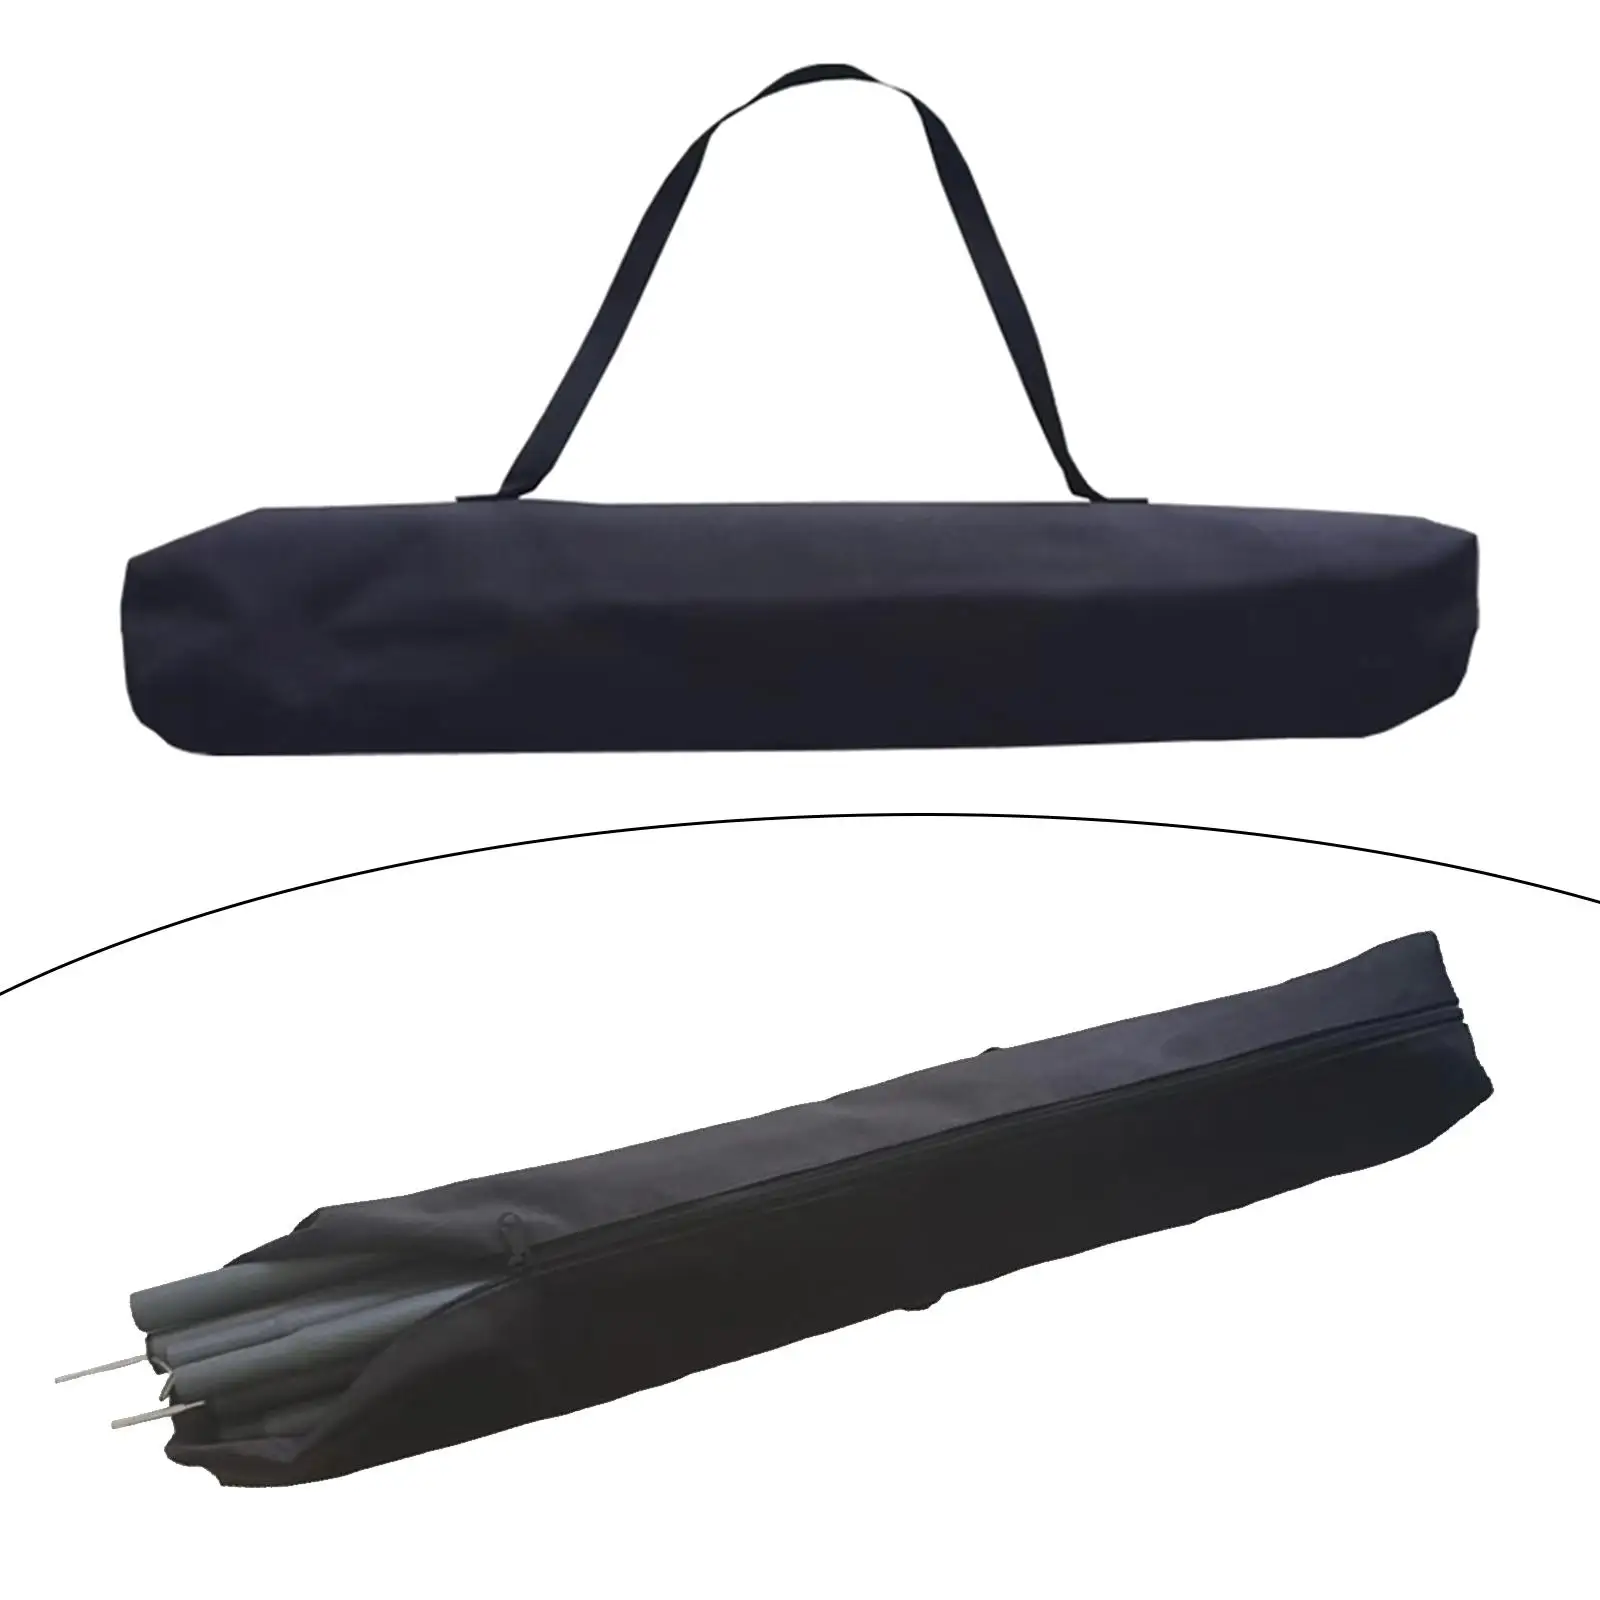 Tent Pole Storage Bag Foldable Lightweight Comfort Handbag Storage Bag Durable Canopy Pole Bag for Camping Trekking Backpacking